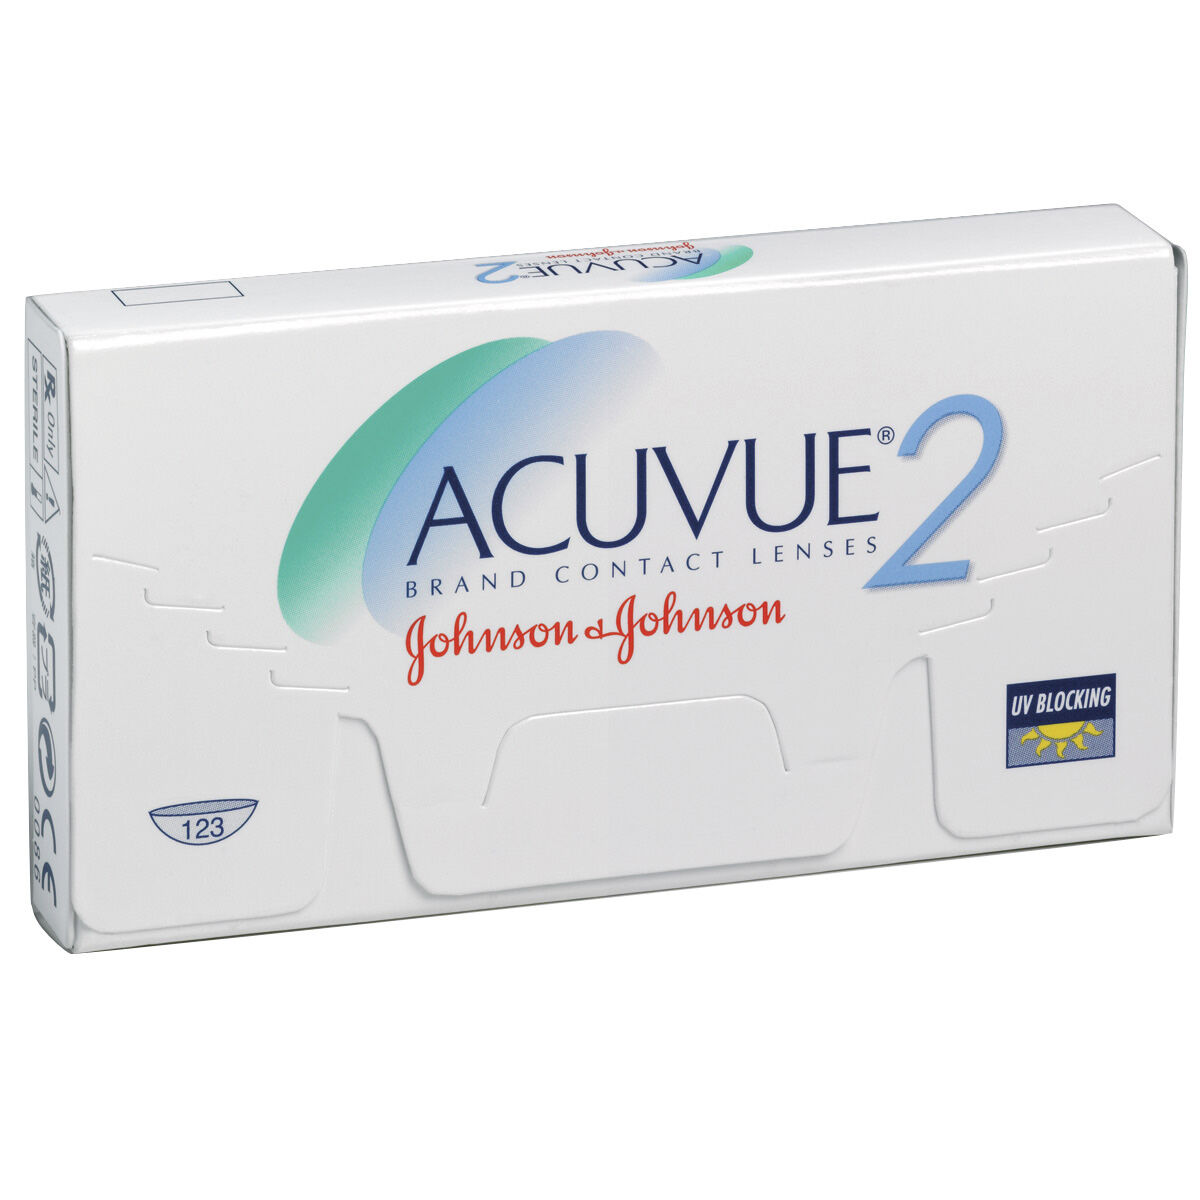 Acuvue 2 (6 Contact Lenses), Johnson & Johnson, Two weekly Lenses, Etafilcon A